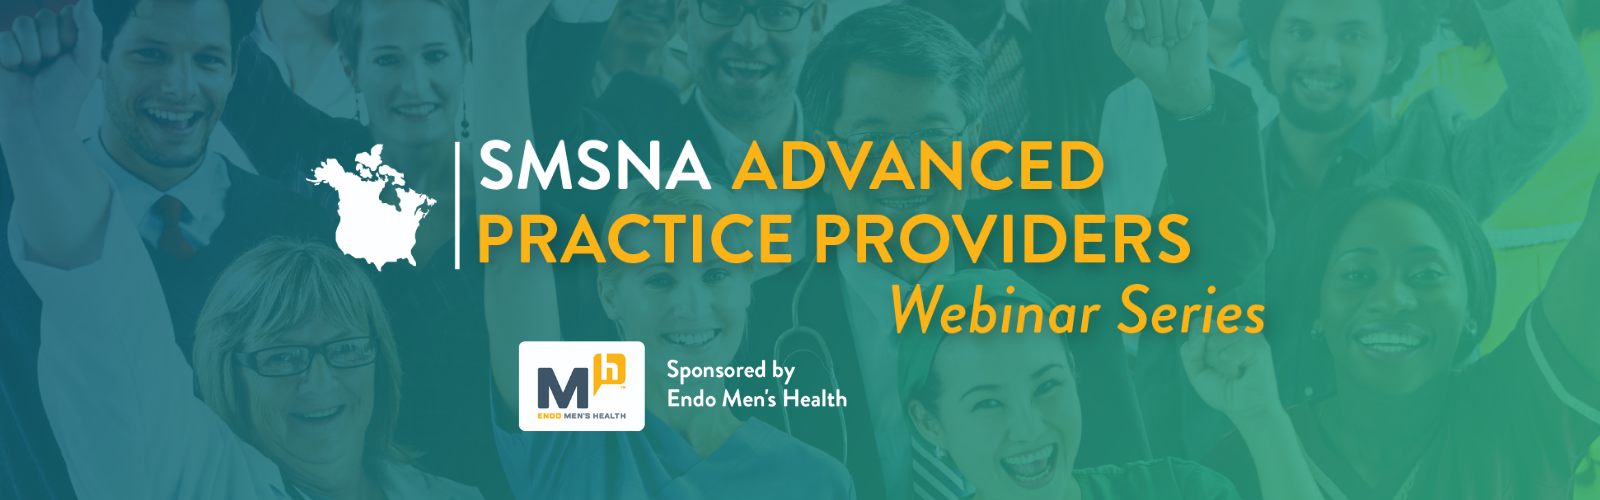 SMSNA Advanced Practice Provider Webinar Series